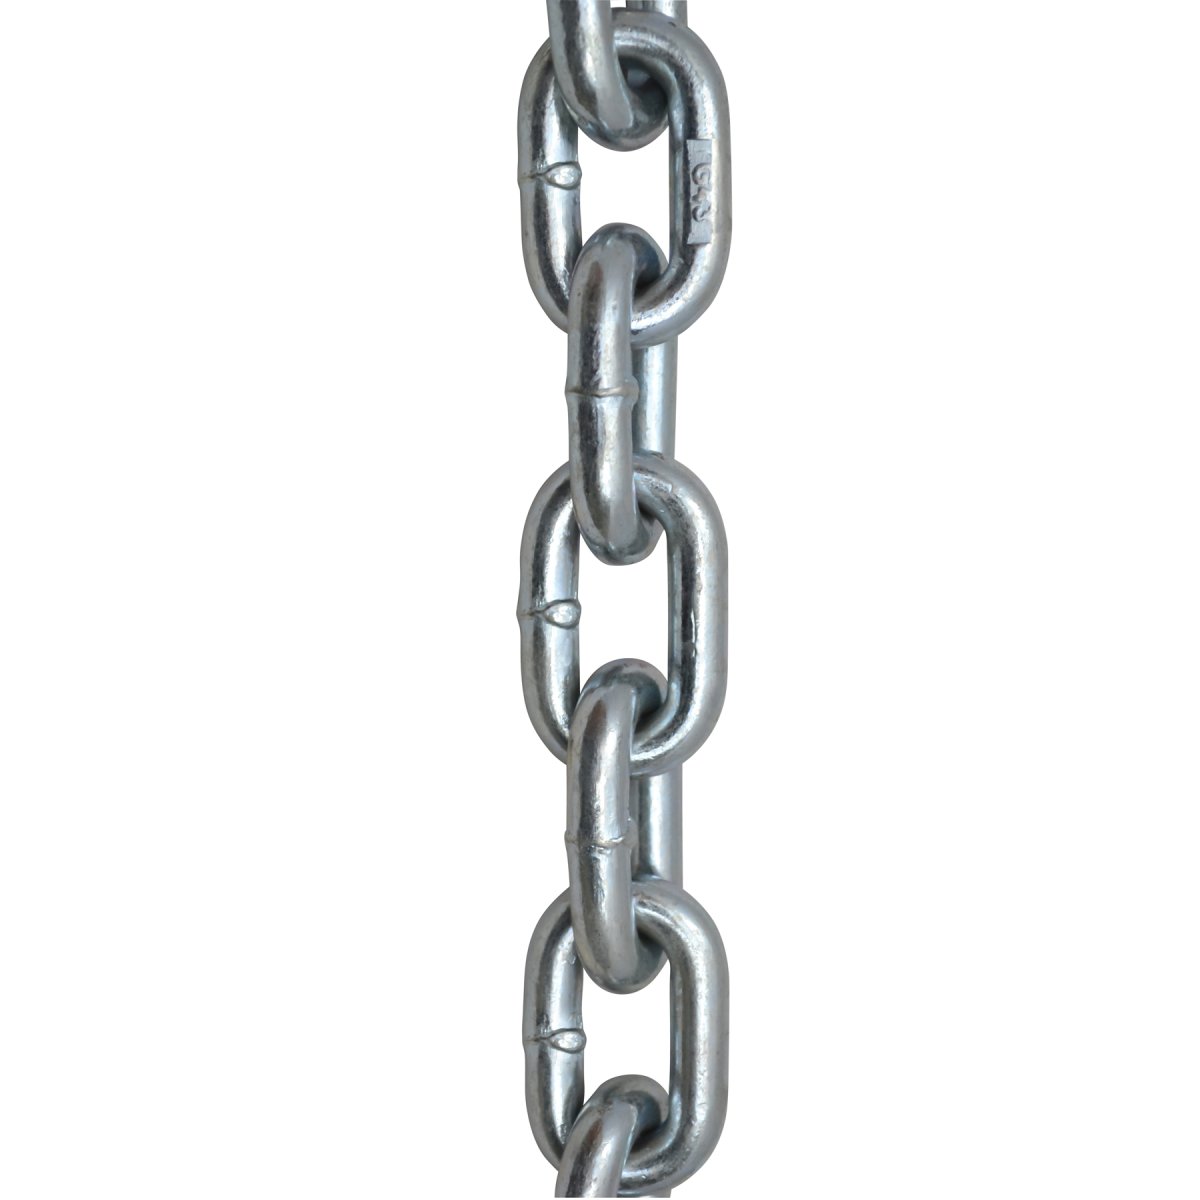 Chain - Proof Coil 3/16 Zinc Clear-pl, цепь 3/16, оцинк